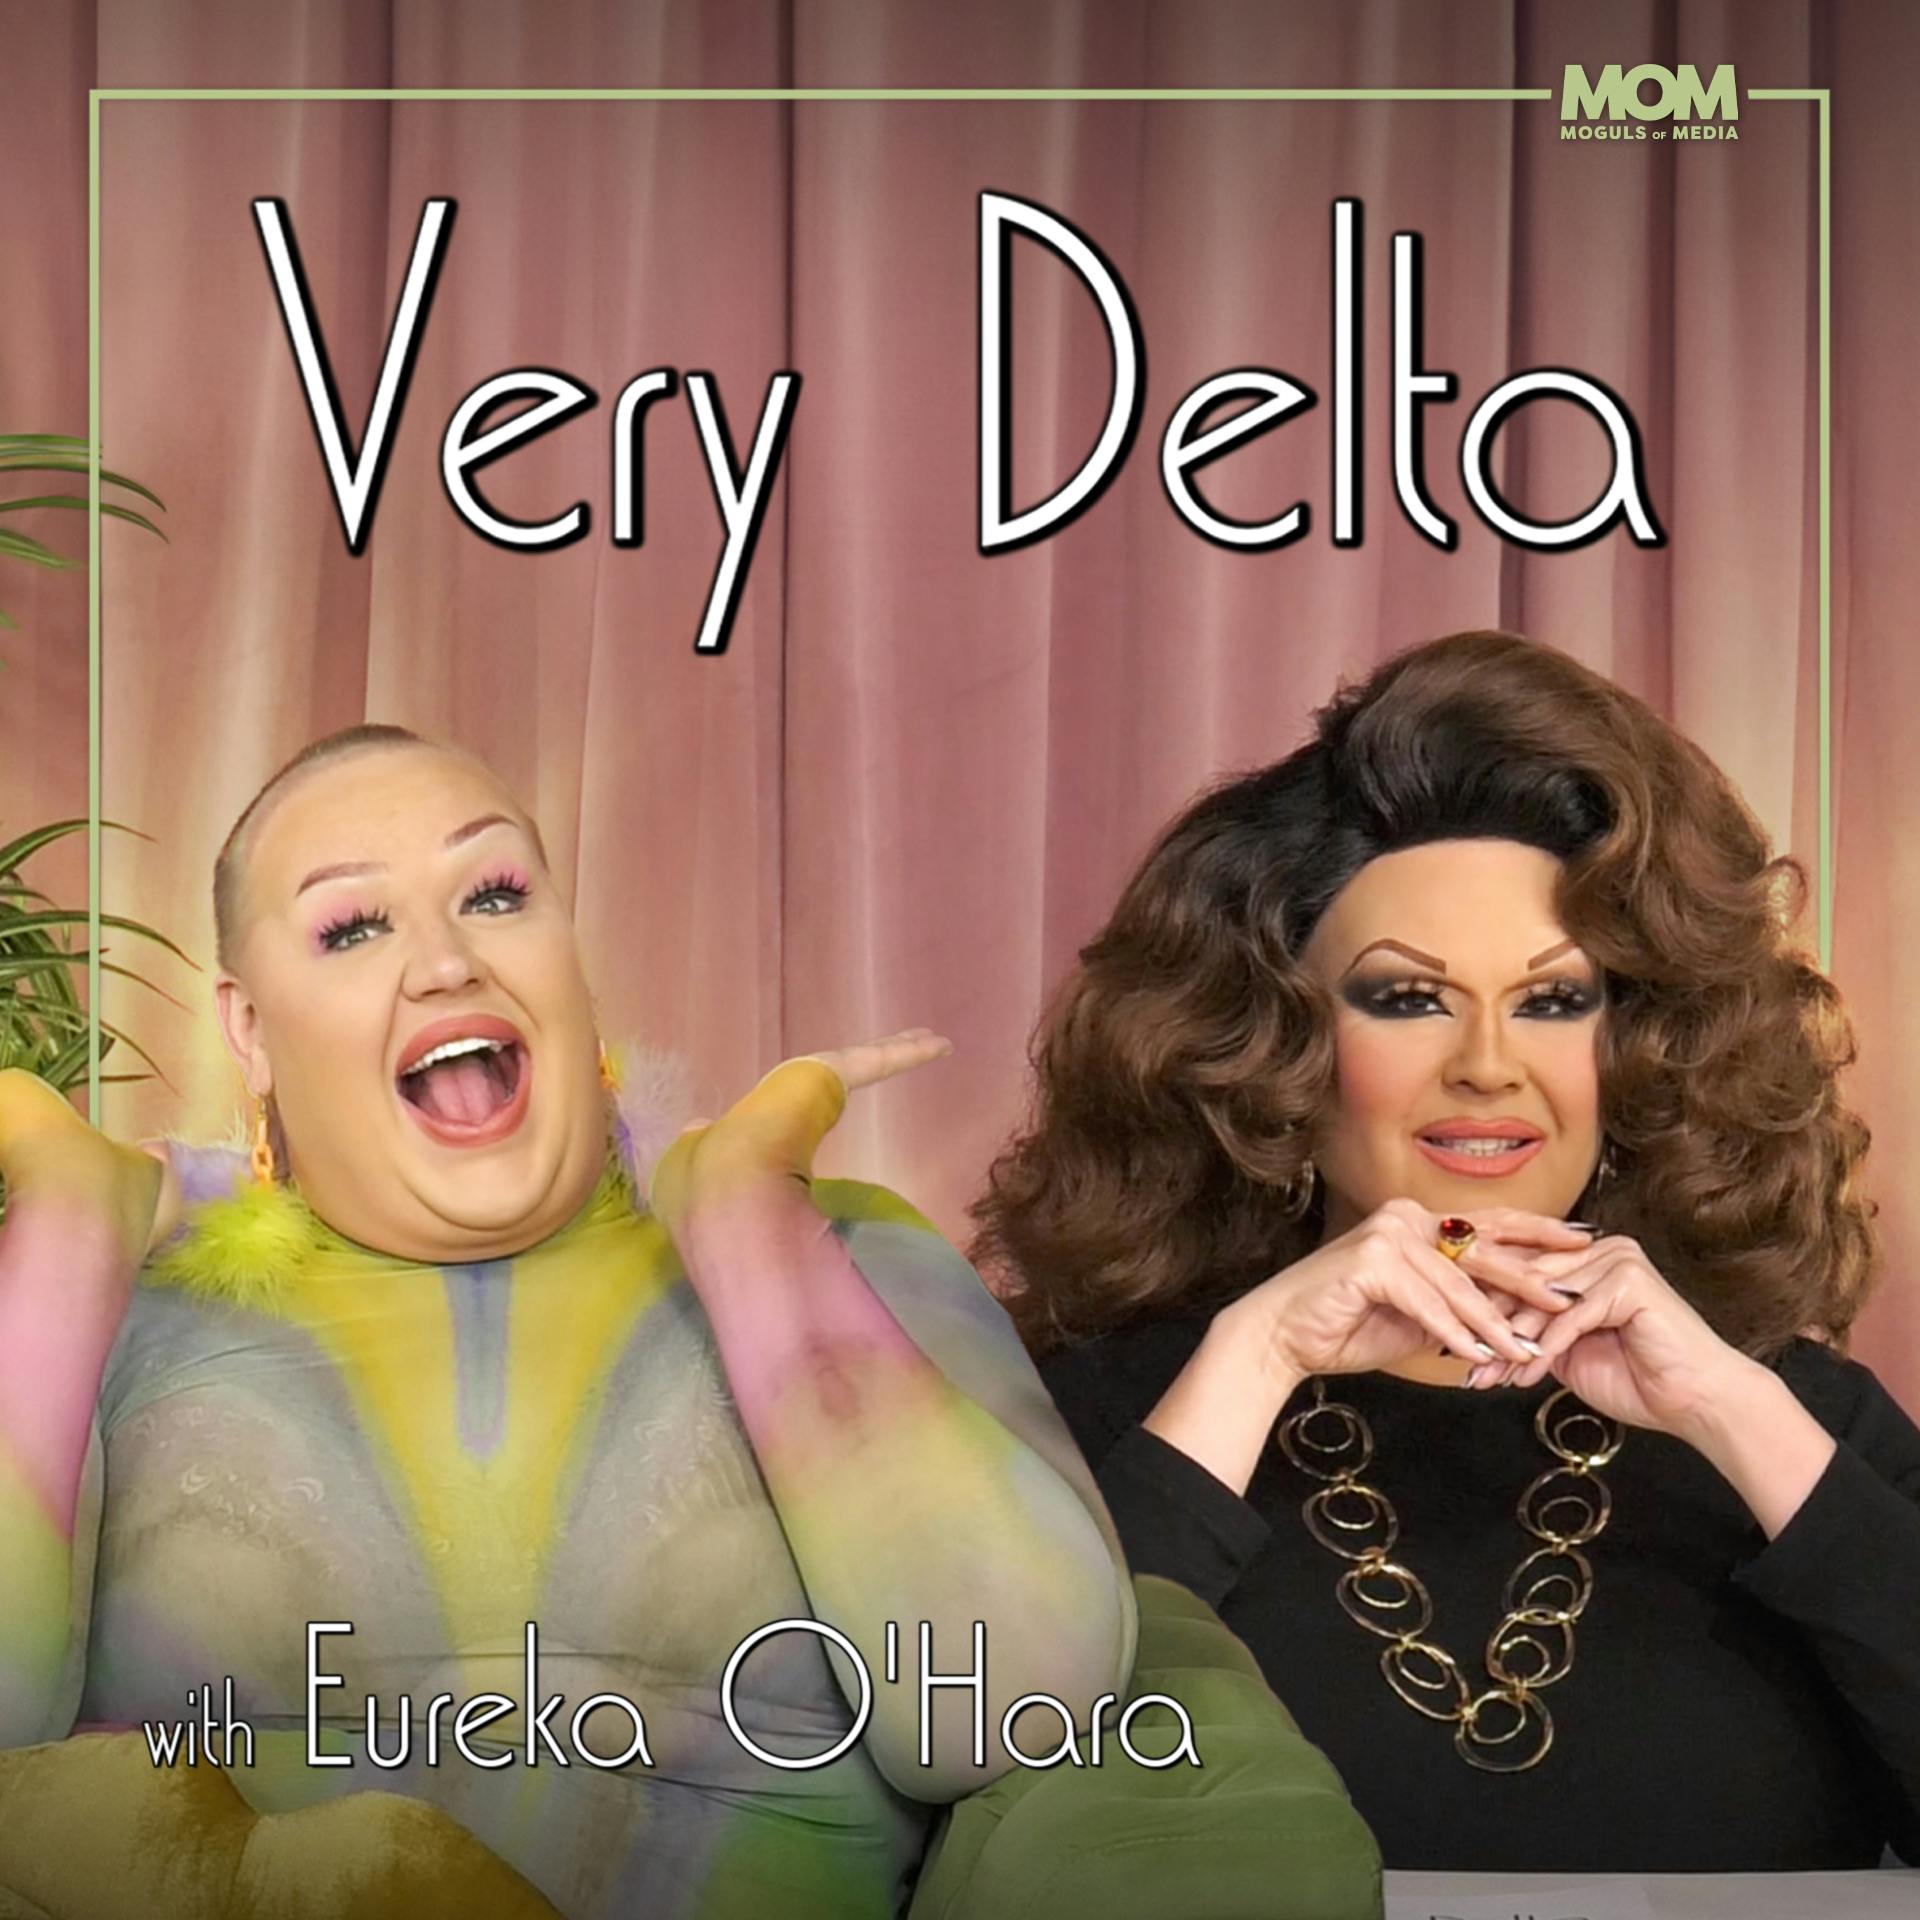 "Very Delta" Episode 91 (w/ Eureka O'Hara)